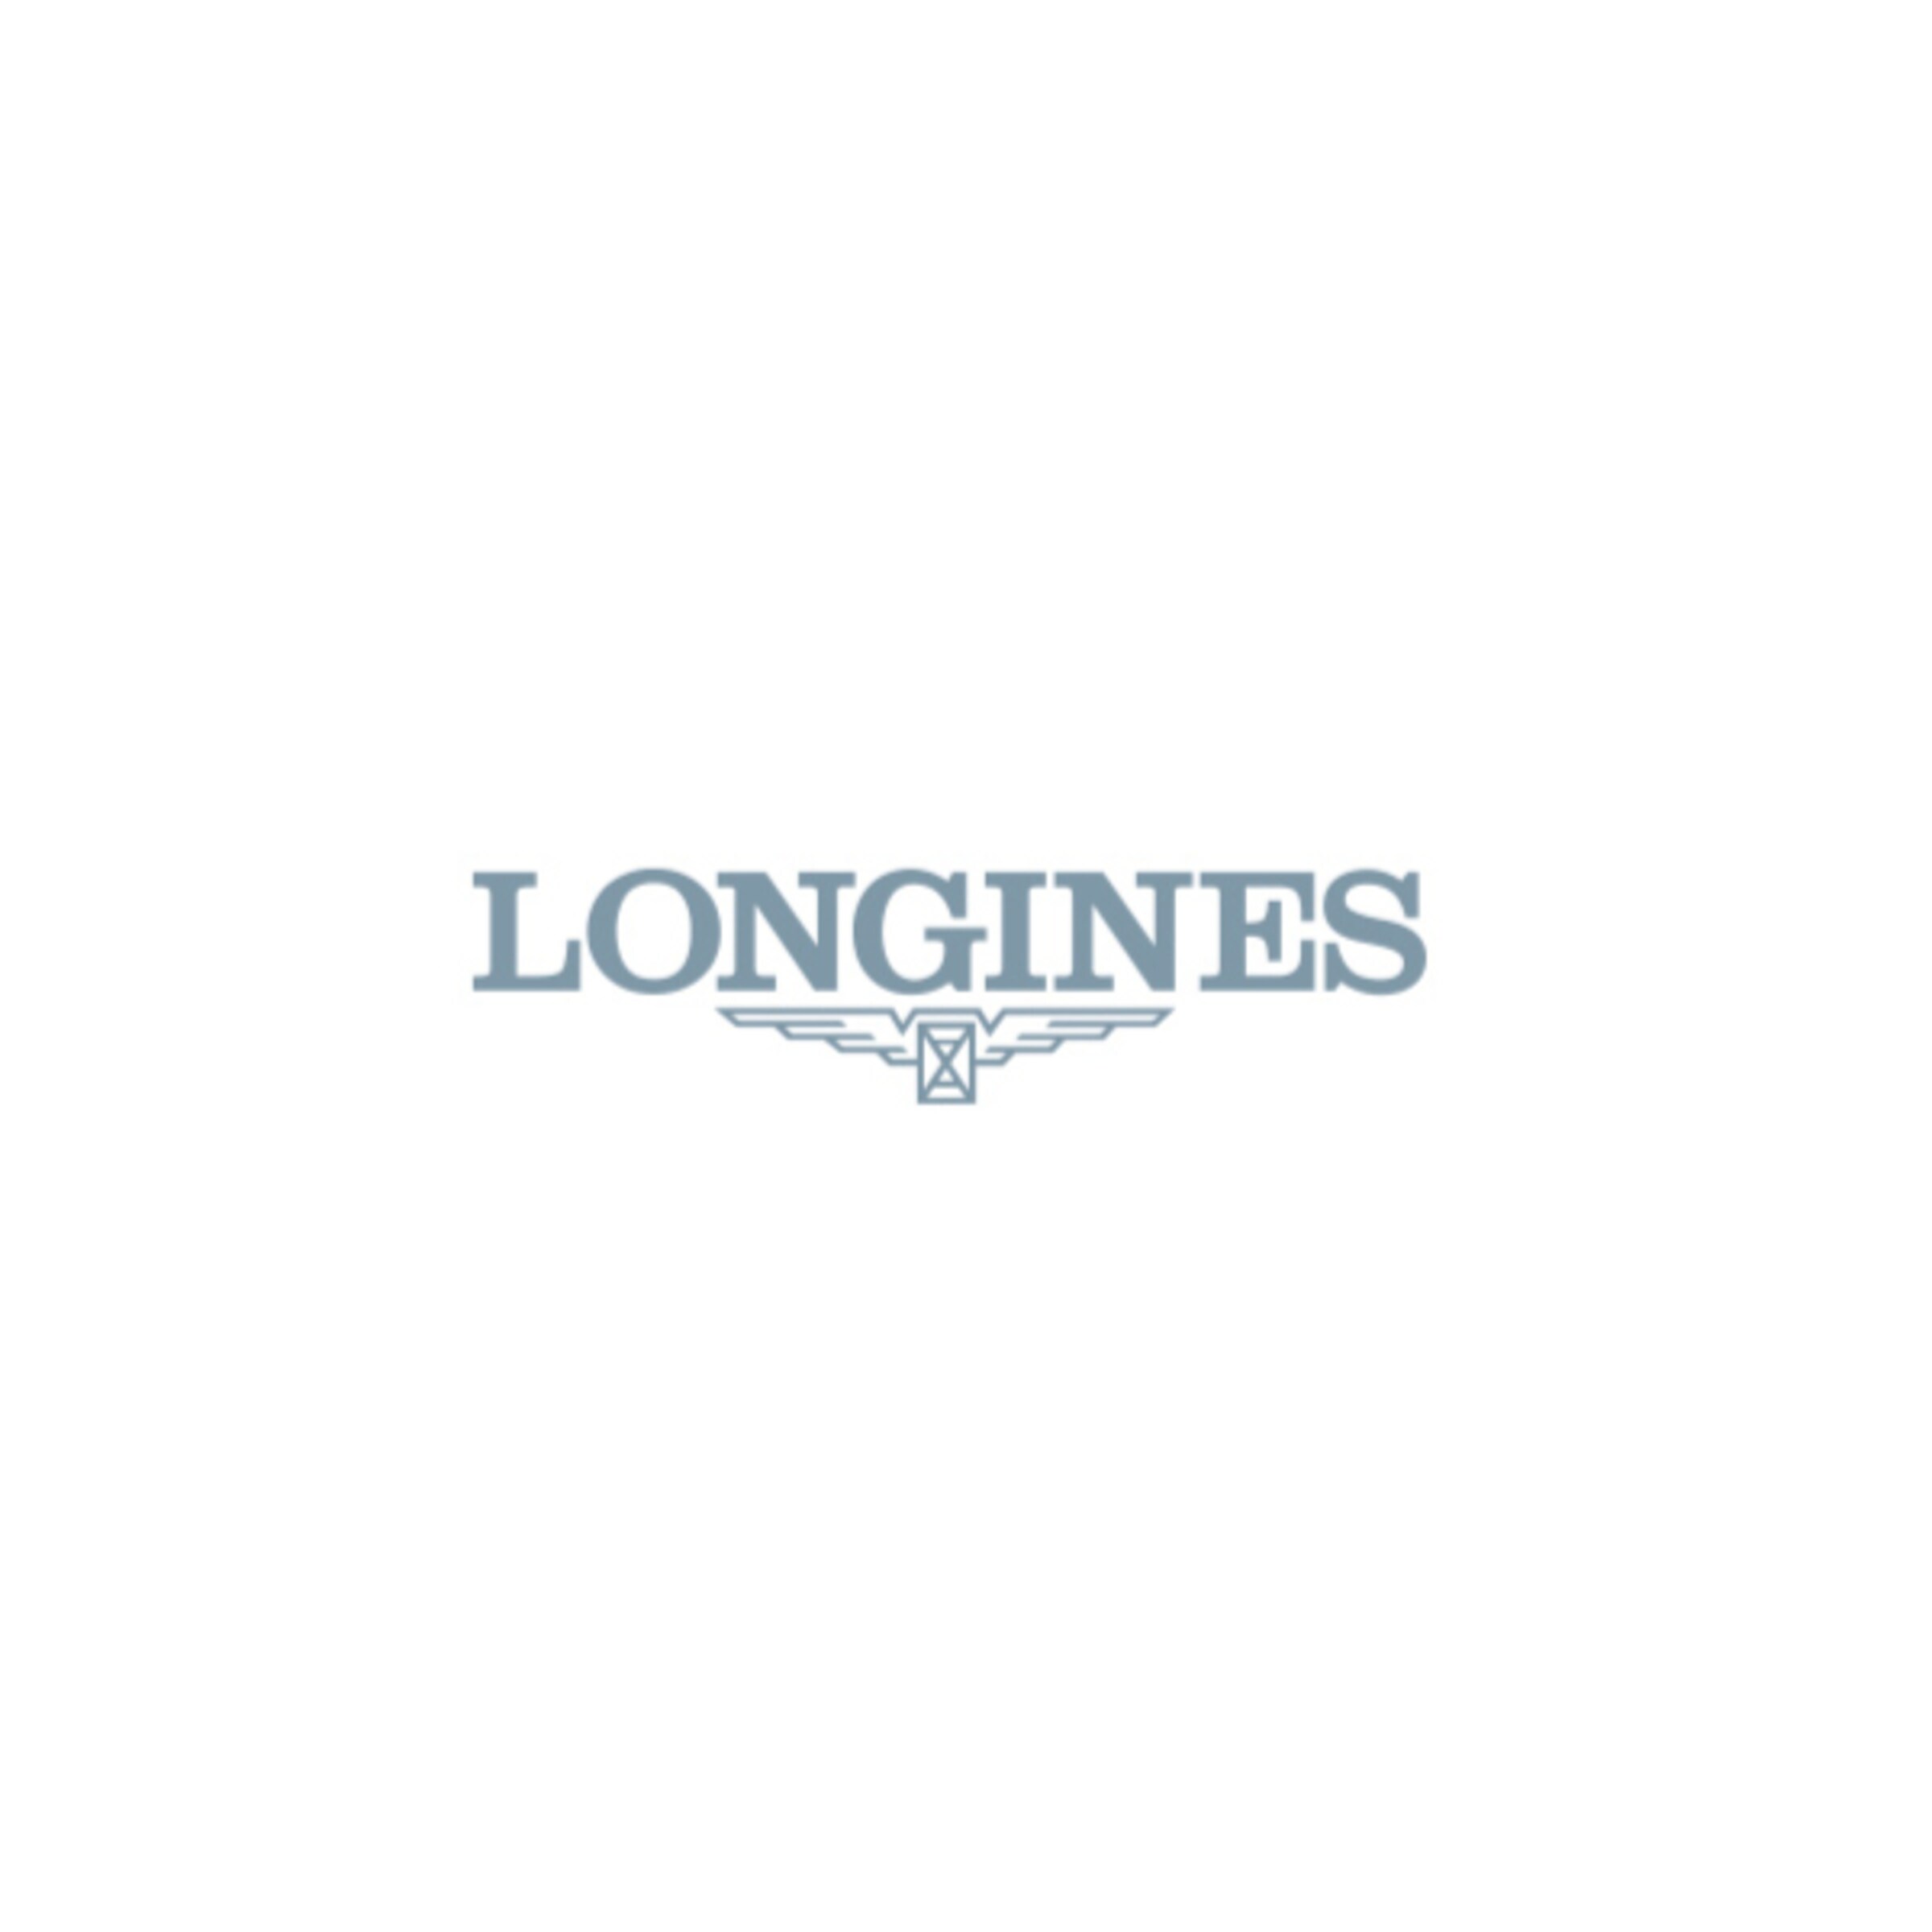 Longines DOLCEVITA Quartz 18 karat pink gold Watch - L5.255.8.71.0